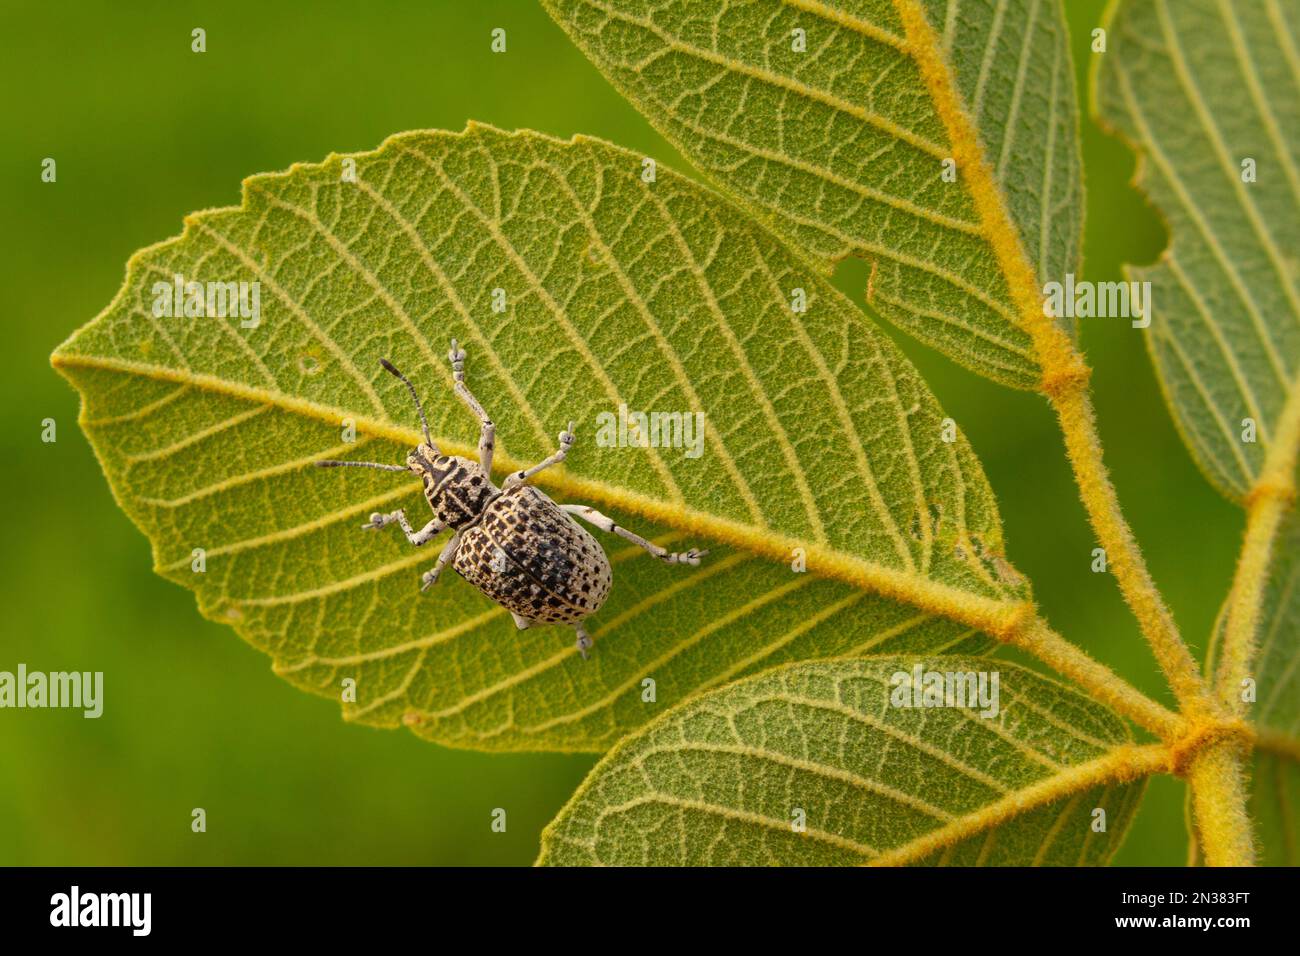 Goiania, Goiás, Brazil – November 07, 2021: Cydianerus latruncularius, coleóptera. A white beetle walking behind a green leaf. Stock Photo